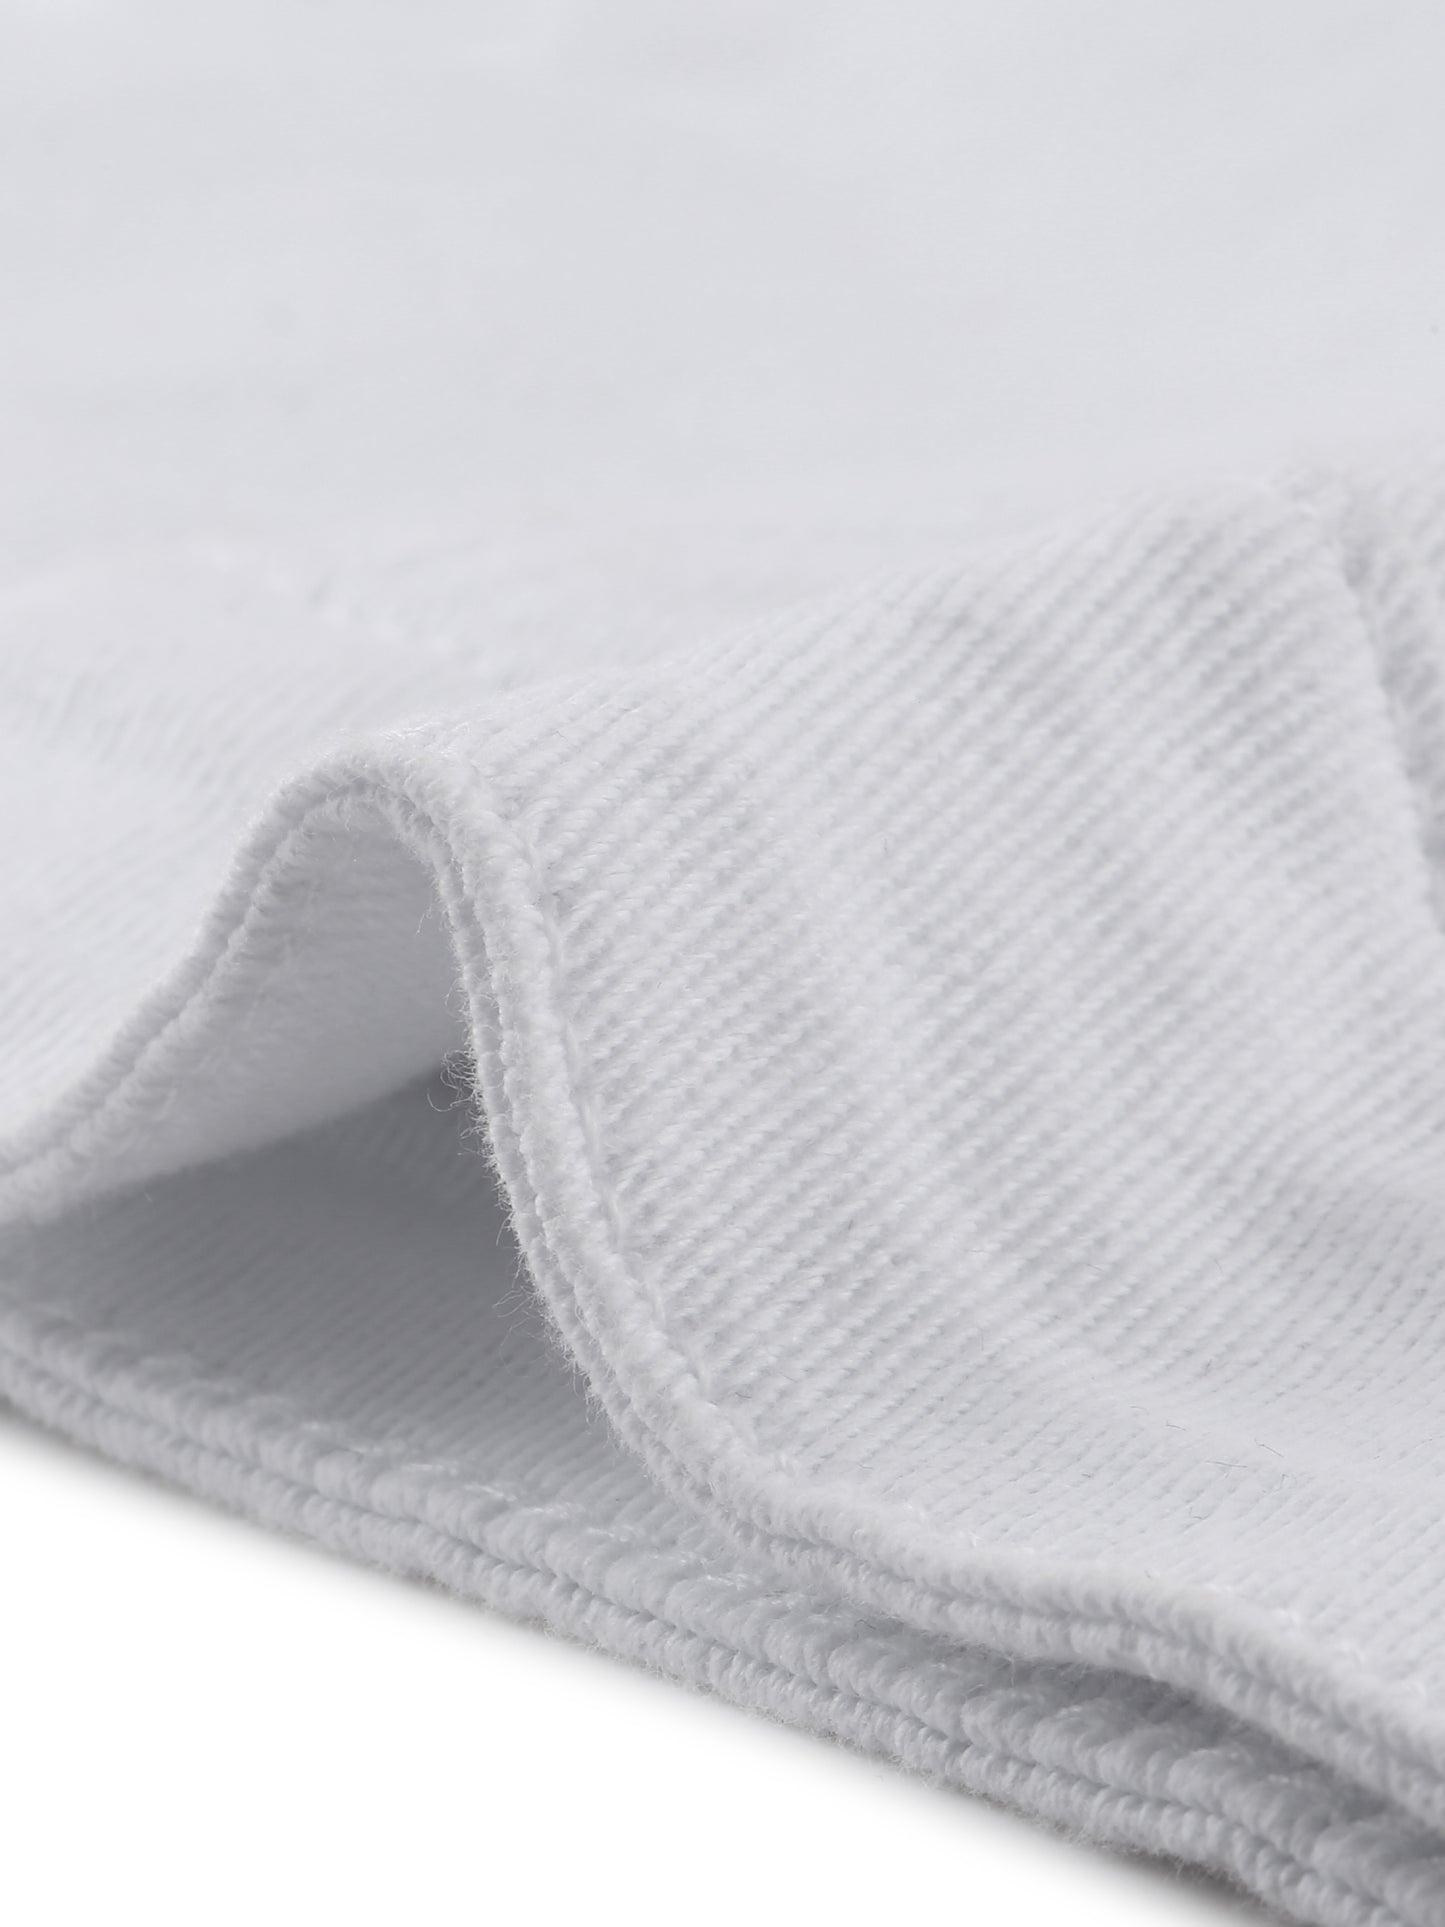 Agnes Orinda Plus Size Stitching Button Front Washed Denim Jacket White